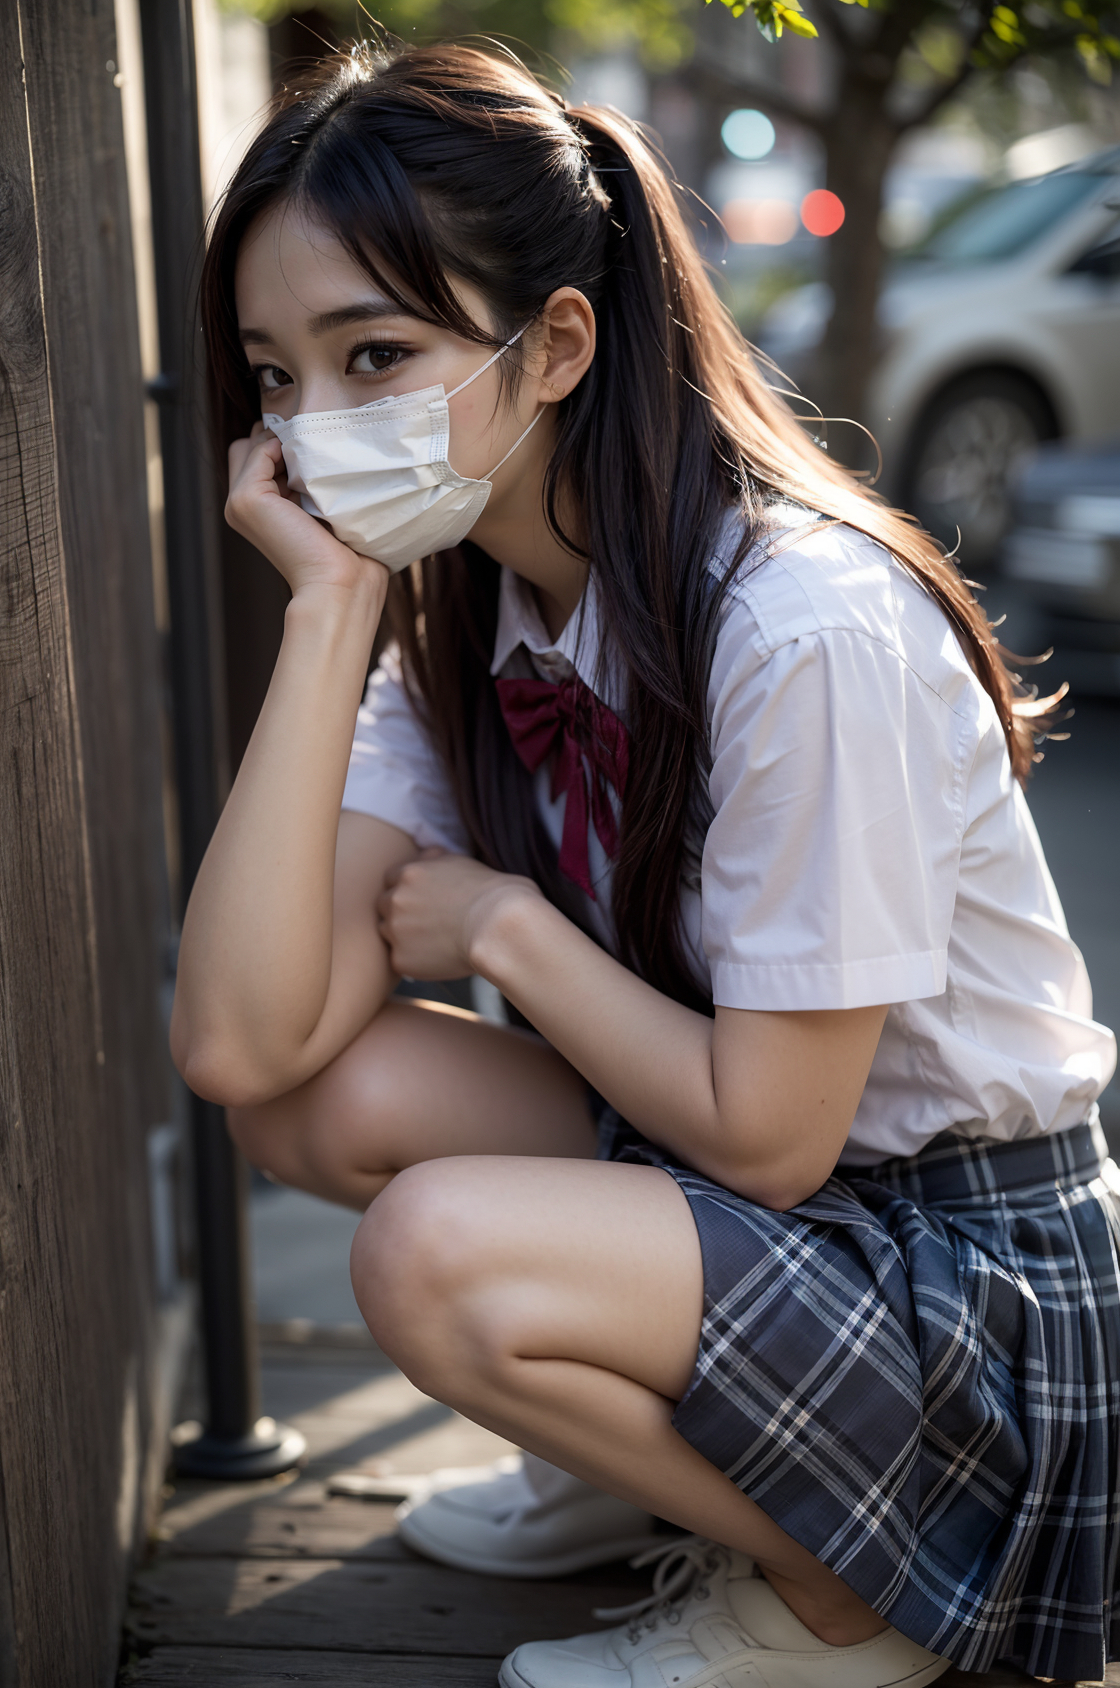 General 1120x1688 AI art schoolgirl school uniform face mask skirt sitting looking at viewer digital art zato1 portrait display squatting mask bow tie Asian